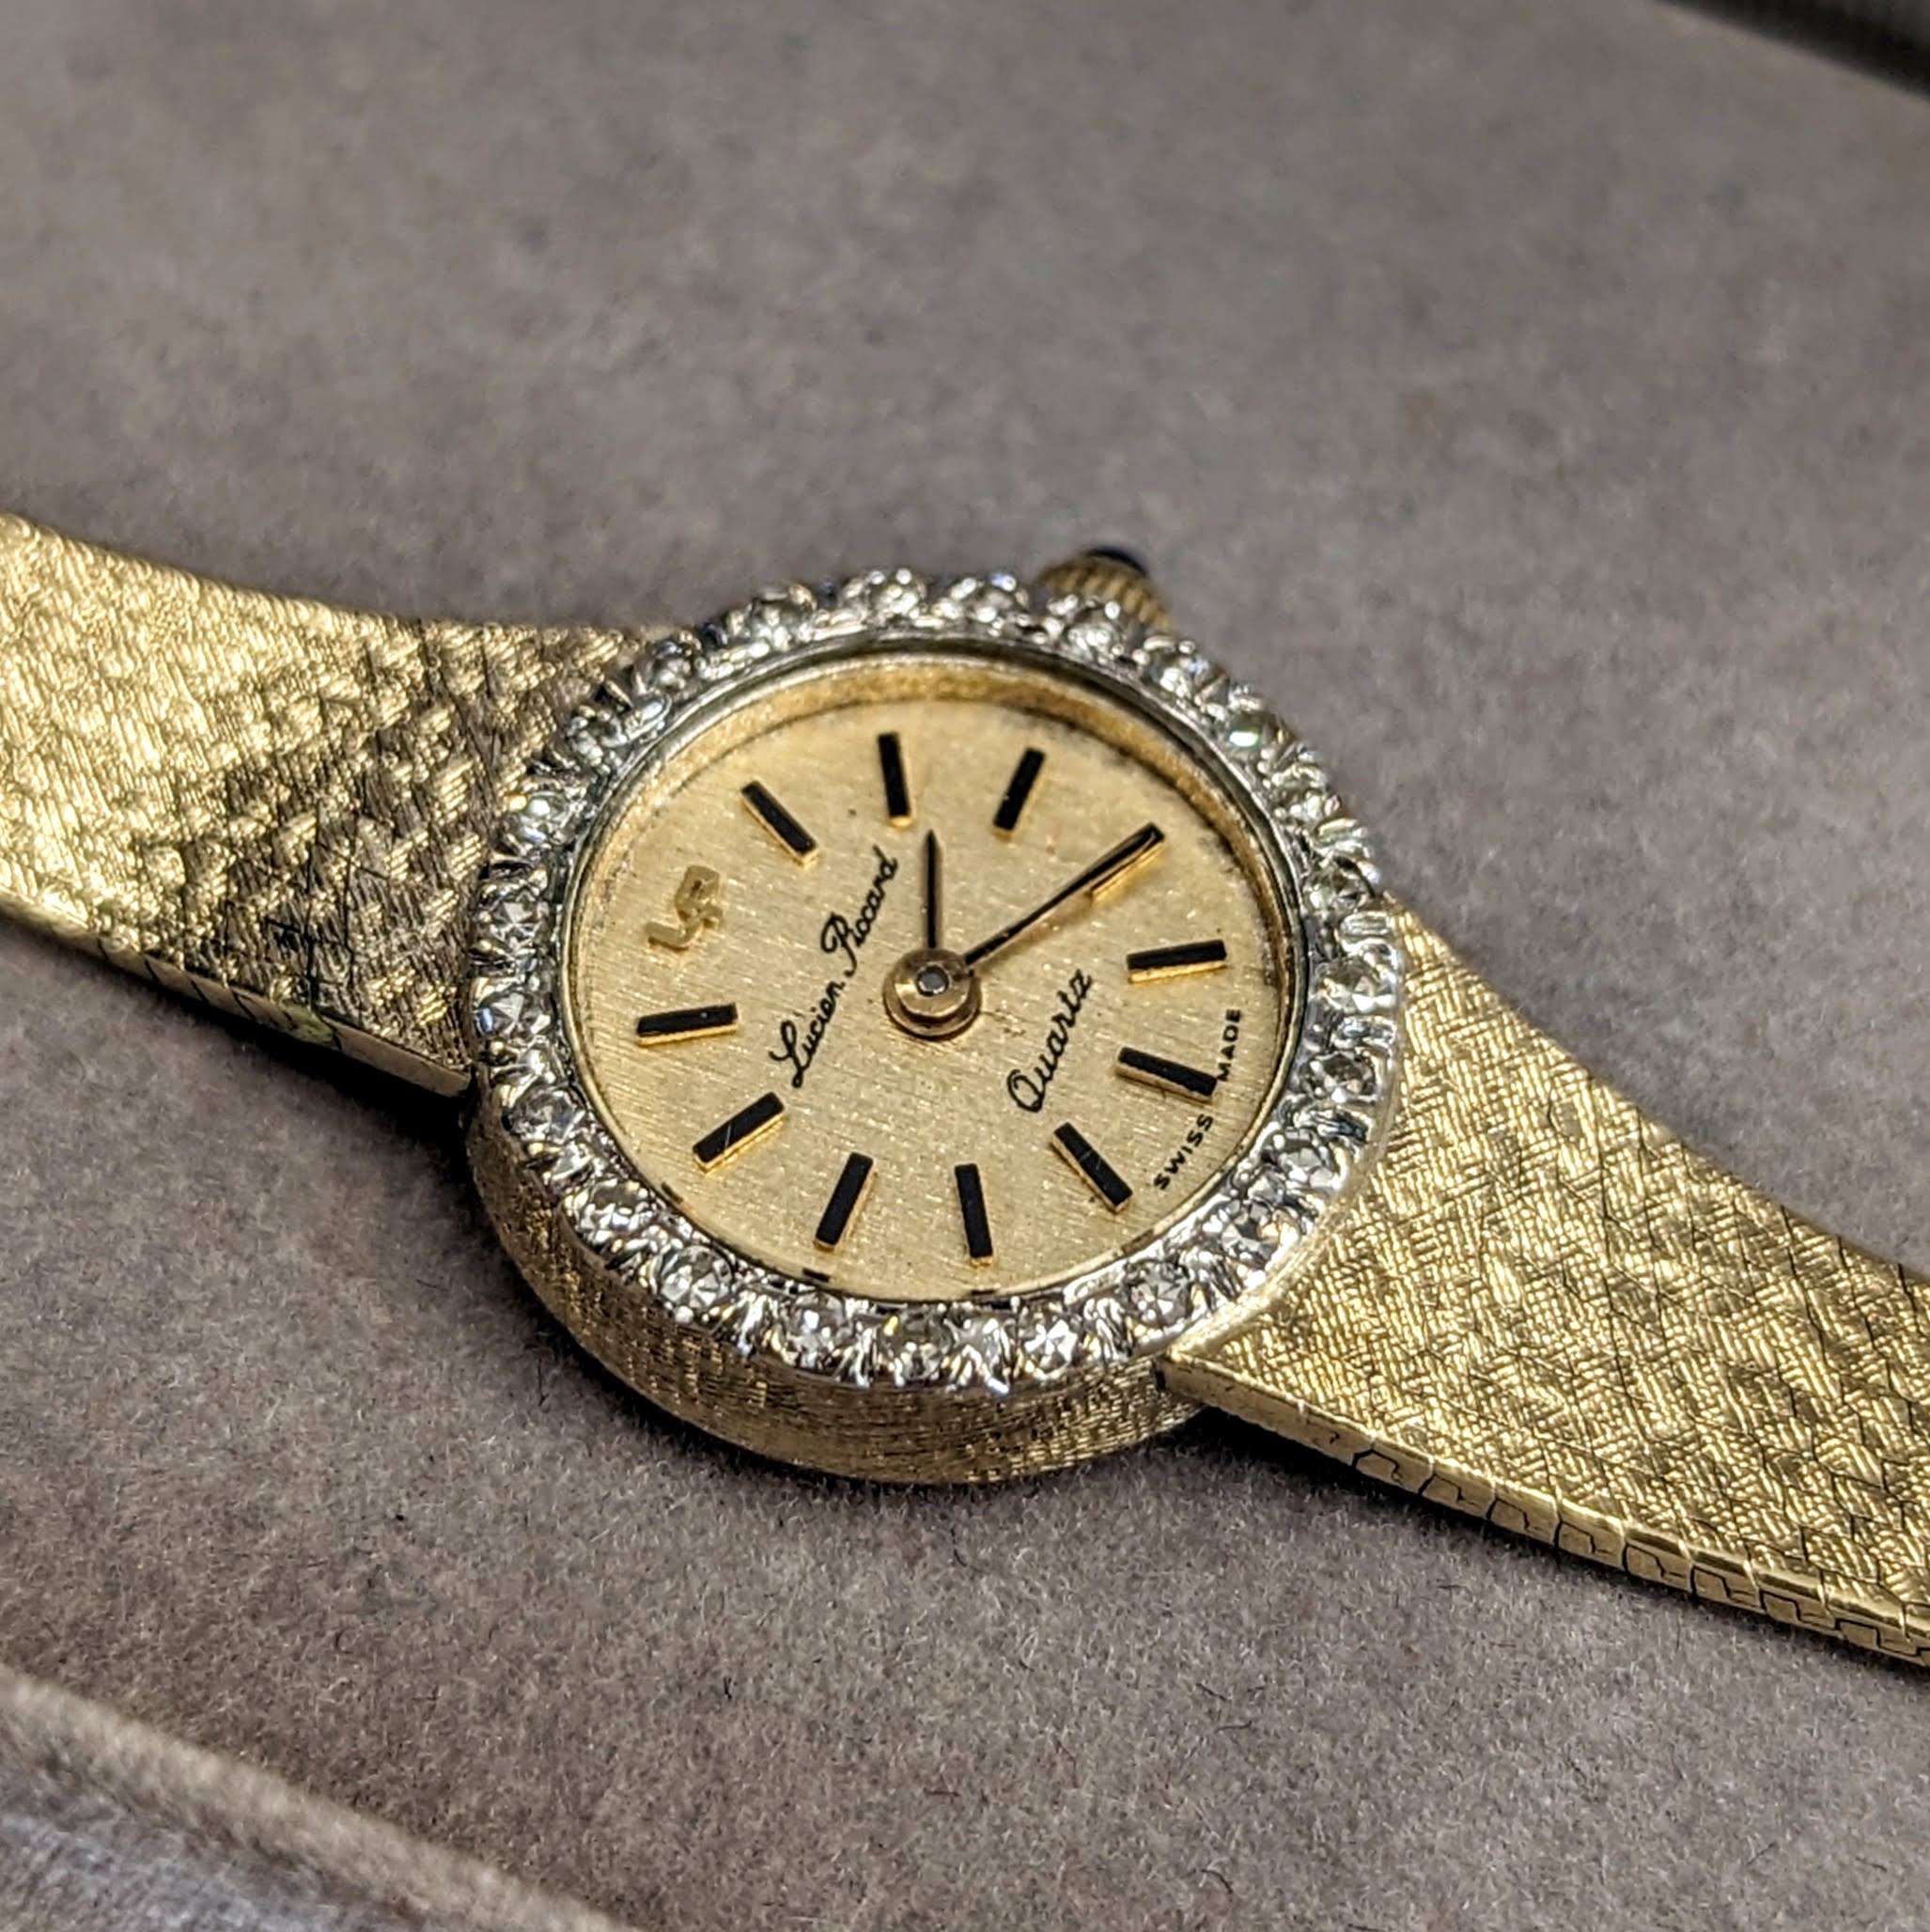 Ladies LUCIEN PICCARD Quartz Watch - ALL 14K Solid GOLD & Diamond Bezel Swiss Vintage Wristwatch